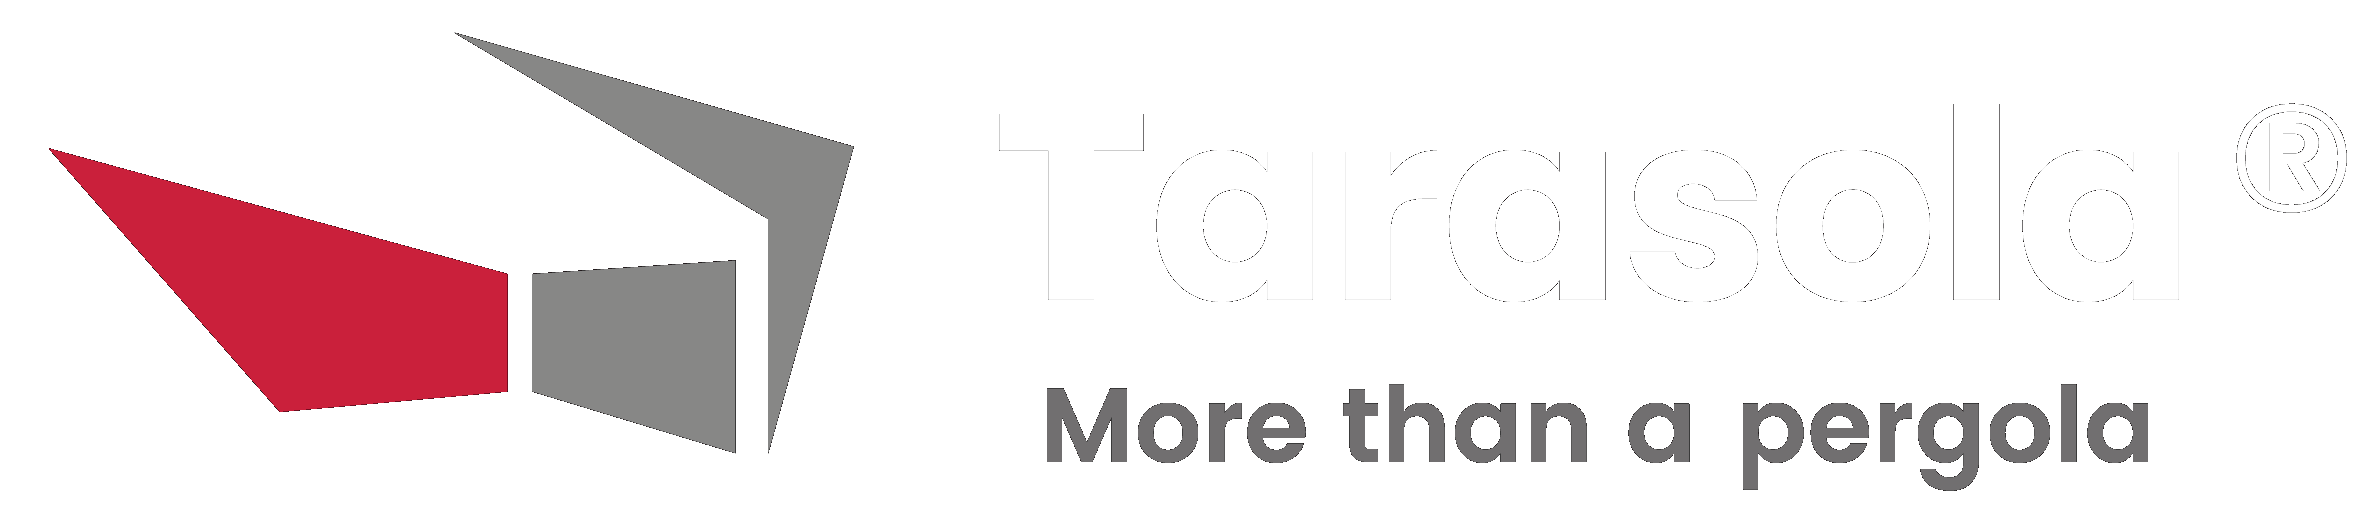 Tarasola Logo More Than a Pergola